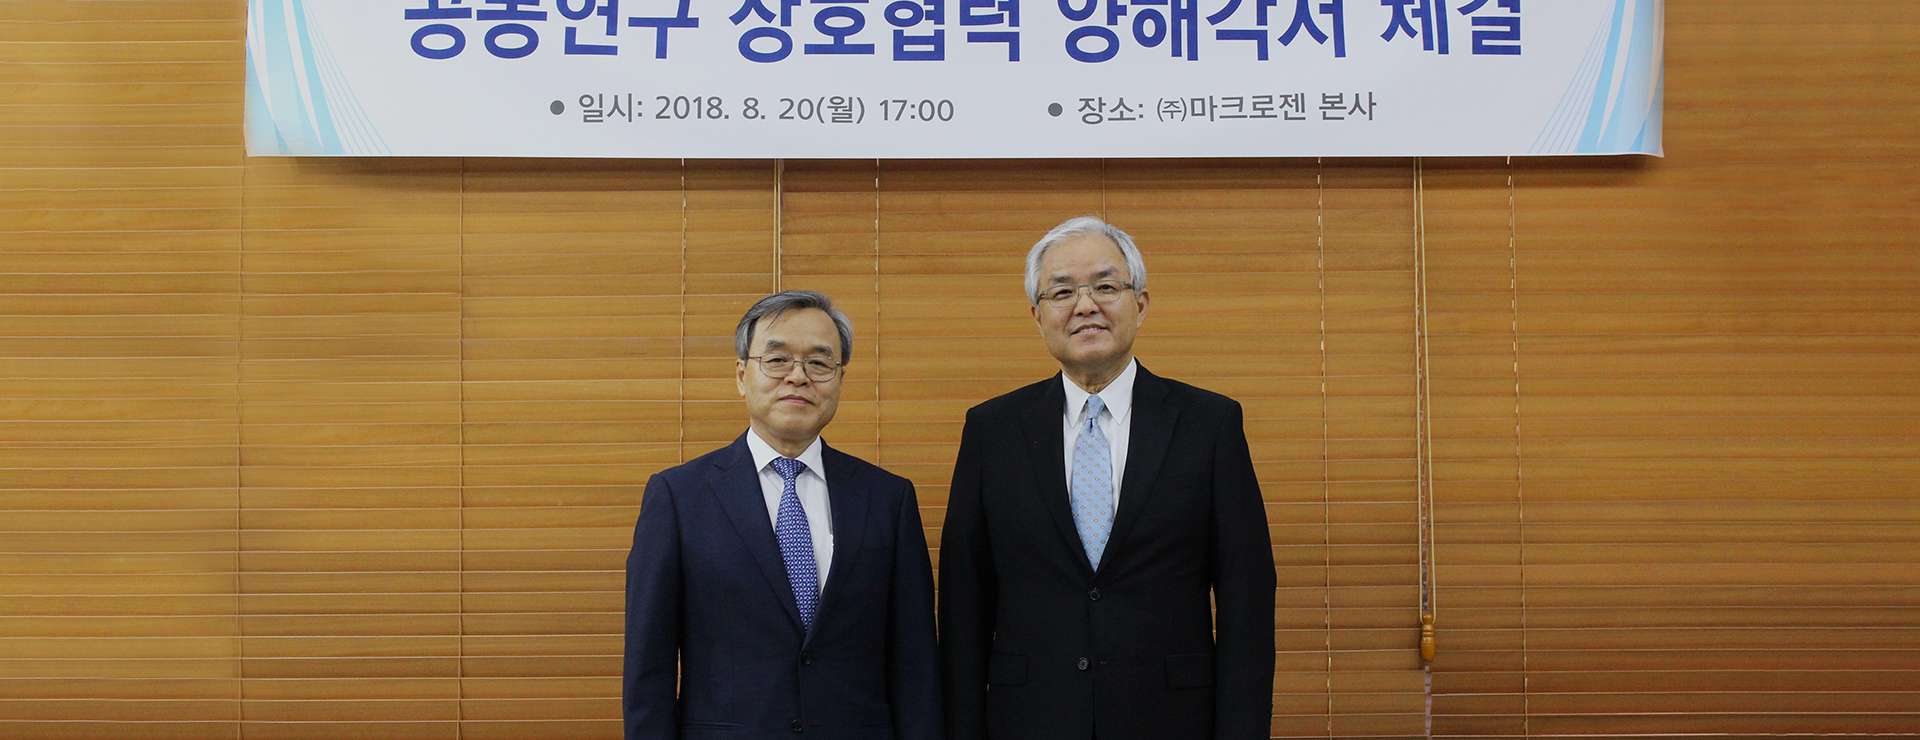 Macrogen-Bundang Seoul National University Hospital signed a memorandum of understanding for mutual cooperation.